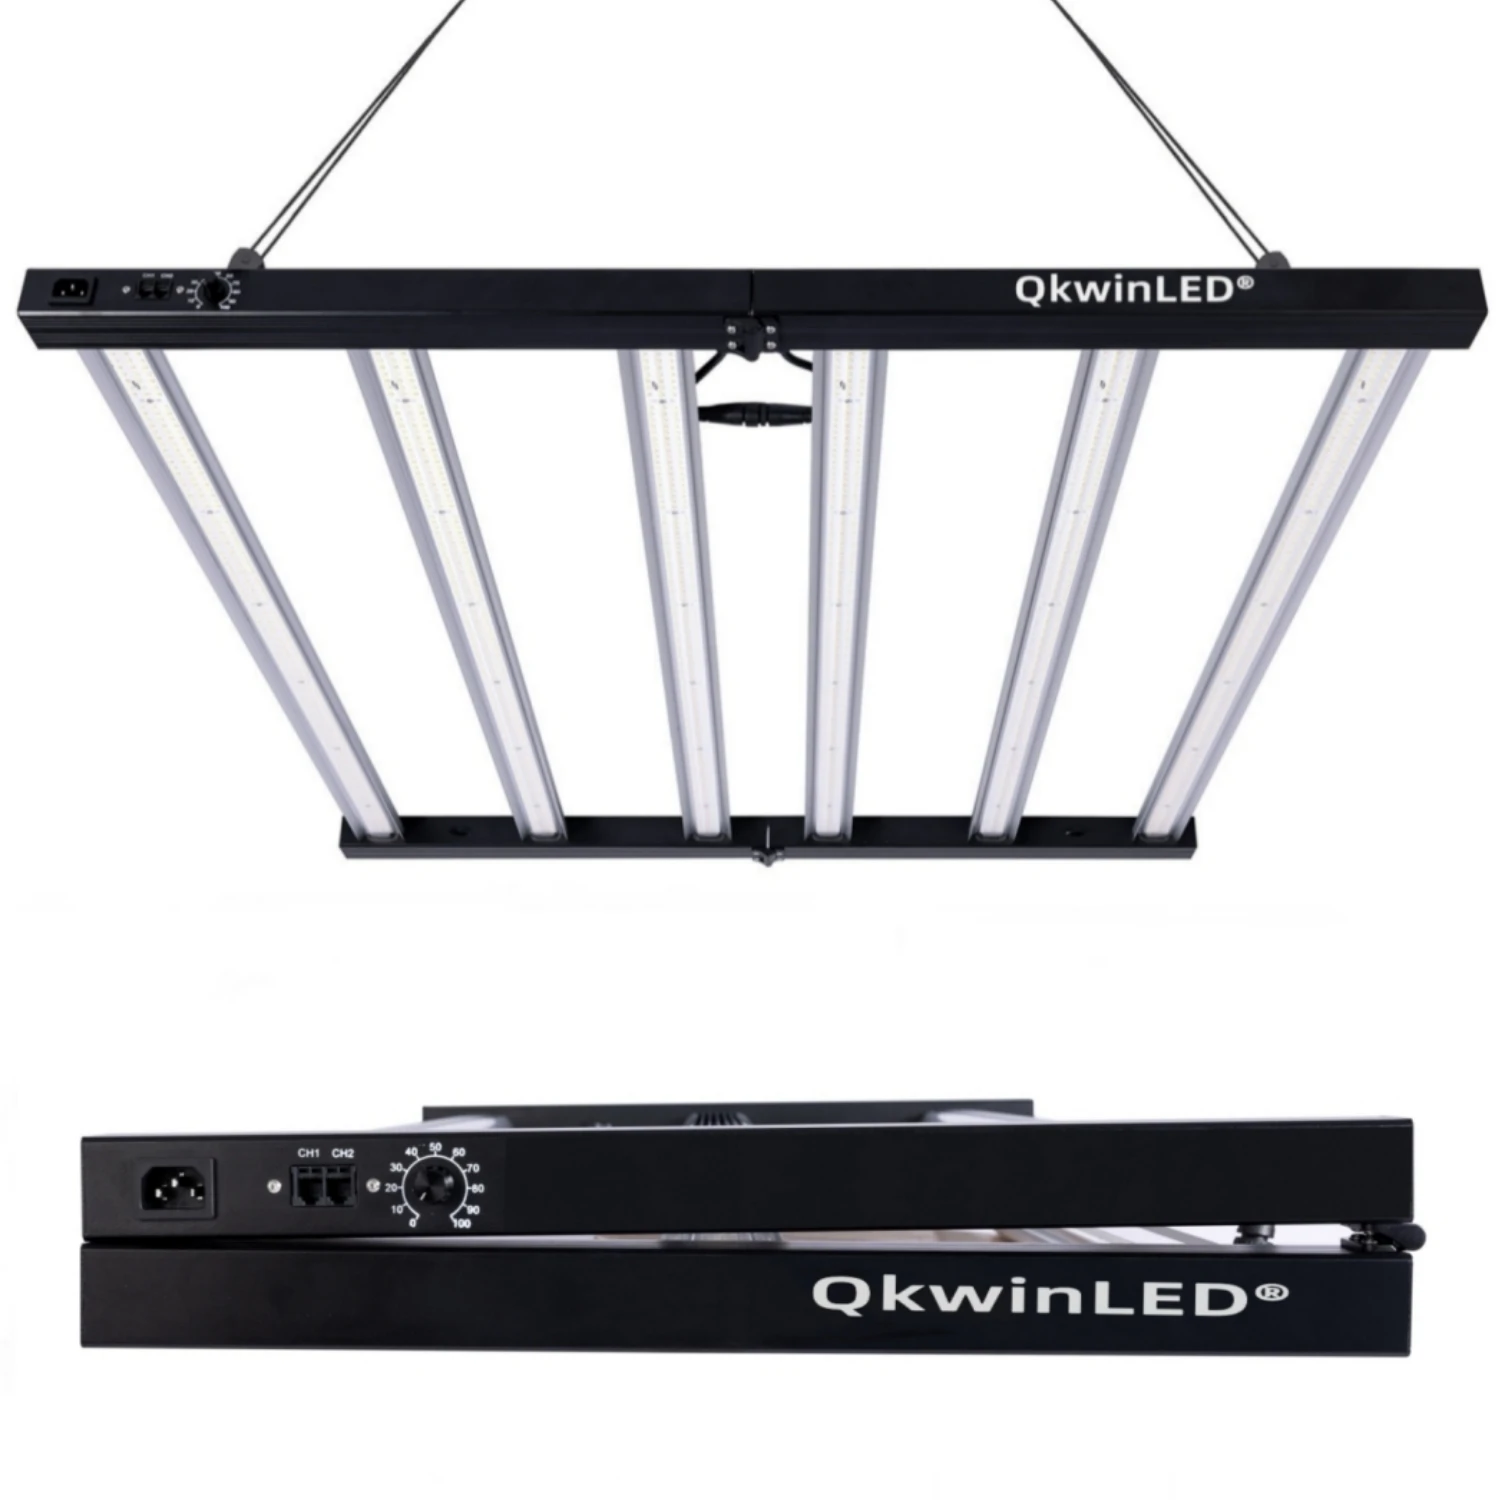 

QKWIN 720Watt 110CM LED Grow Light with samsung leds Bar droshipping